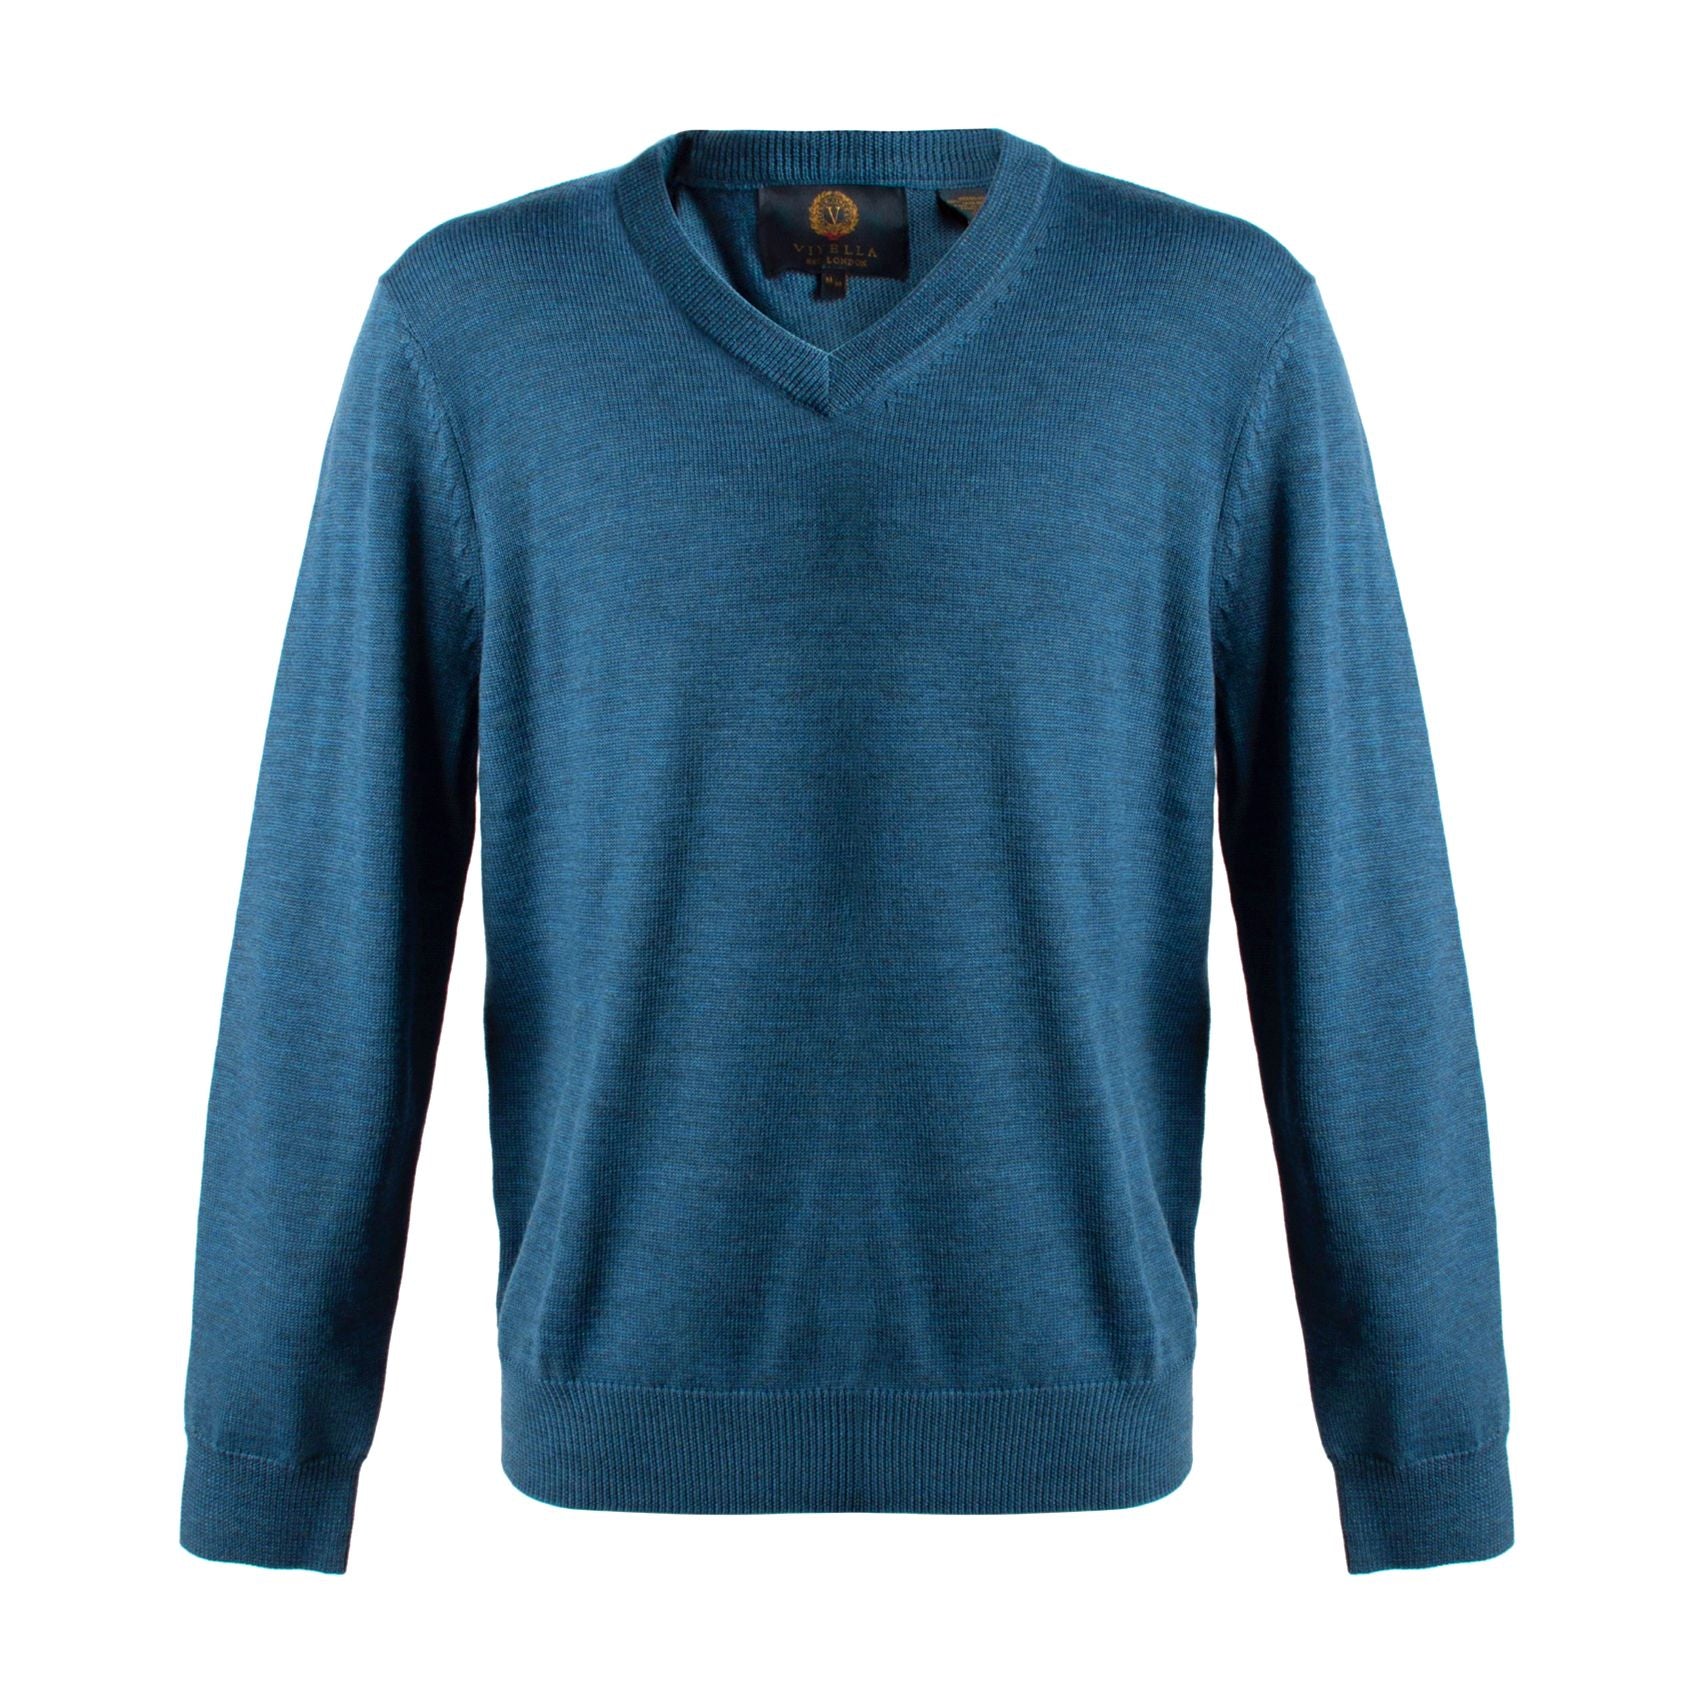 Extra Fine 'Zegna Baruffa' Merino Wool V-Neck Sweater in Teal Blue by Viyella